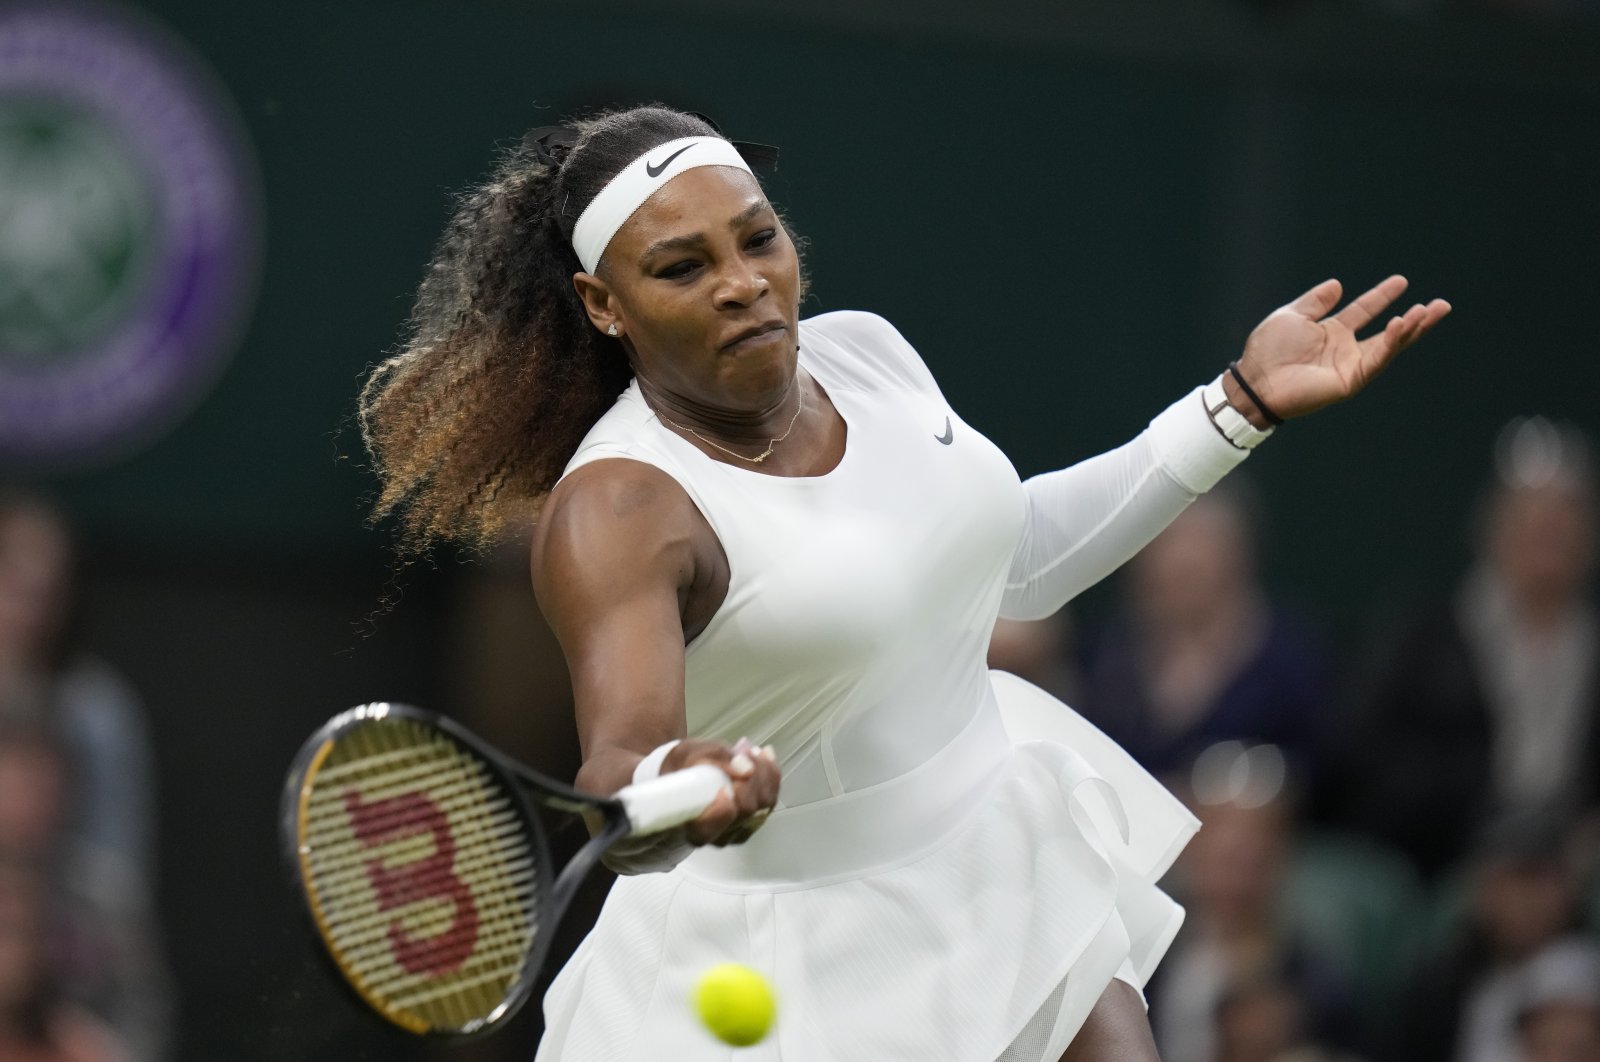 Serena Williams plays Aliaksandra Sasnovich at the Wimbledon, London, June 29, 2021. (AP Photo)